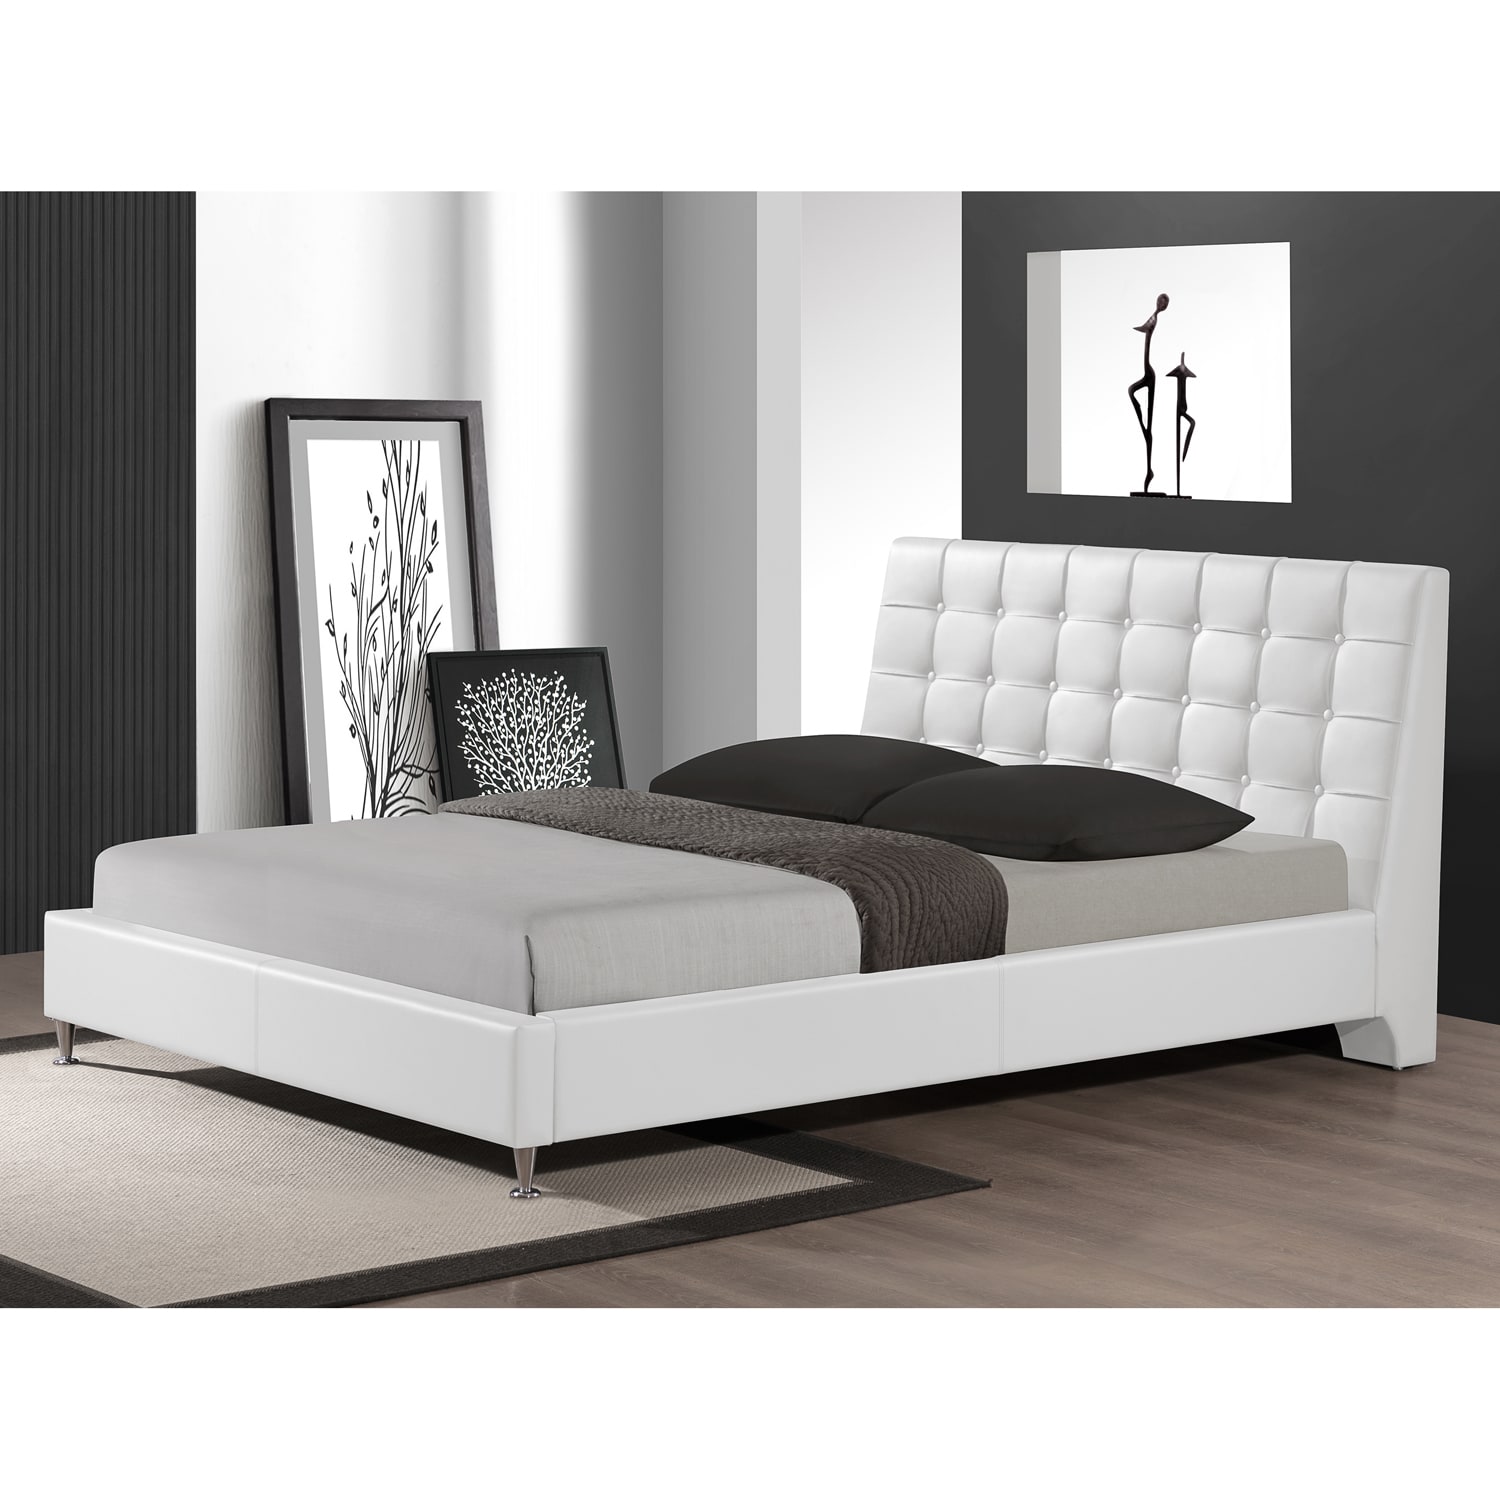 Baxton Studio Baxton Studio Zeller White Modern Bed With Upholstered Headboard   Queen Size White Size Queen